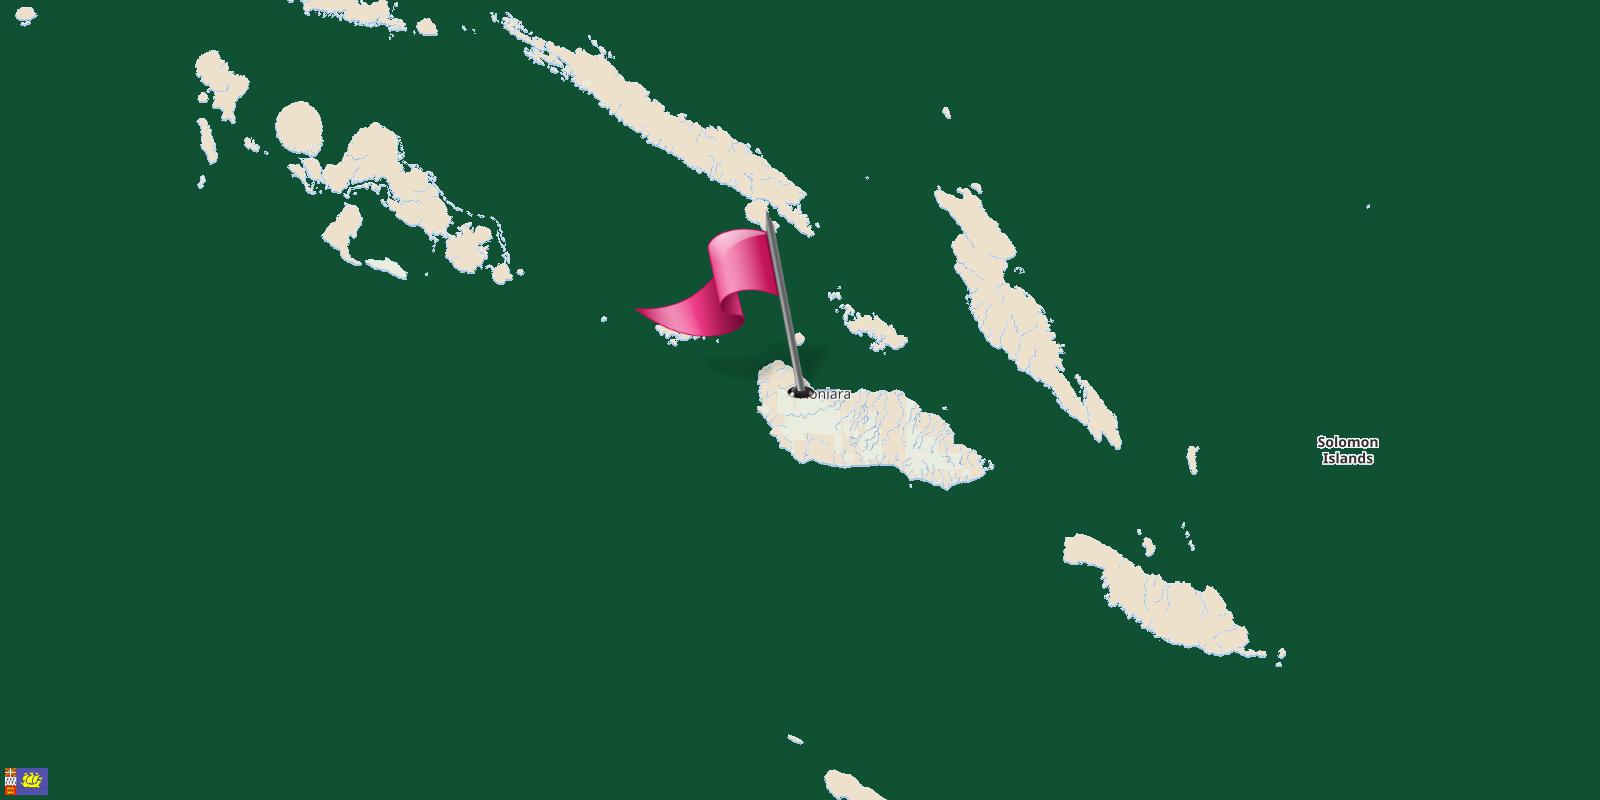 Solomon Islands map